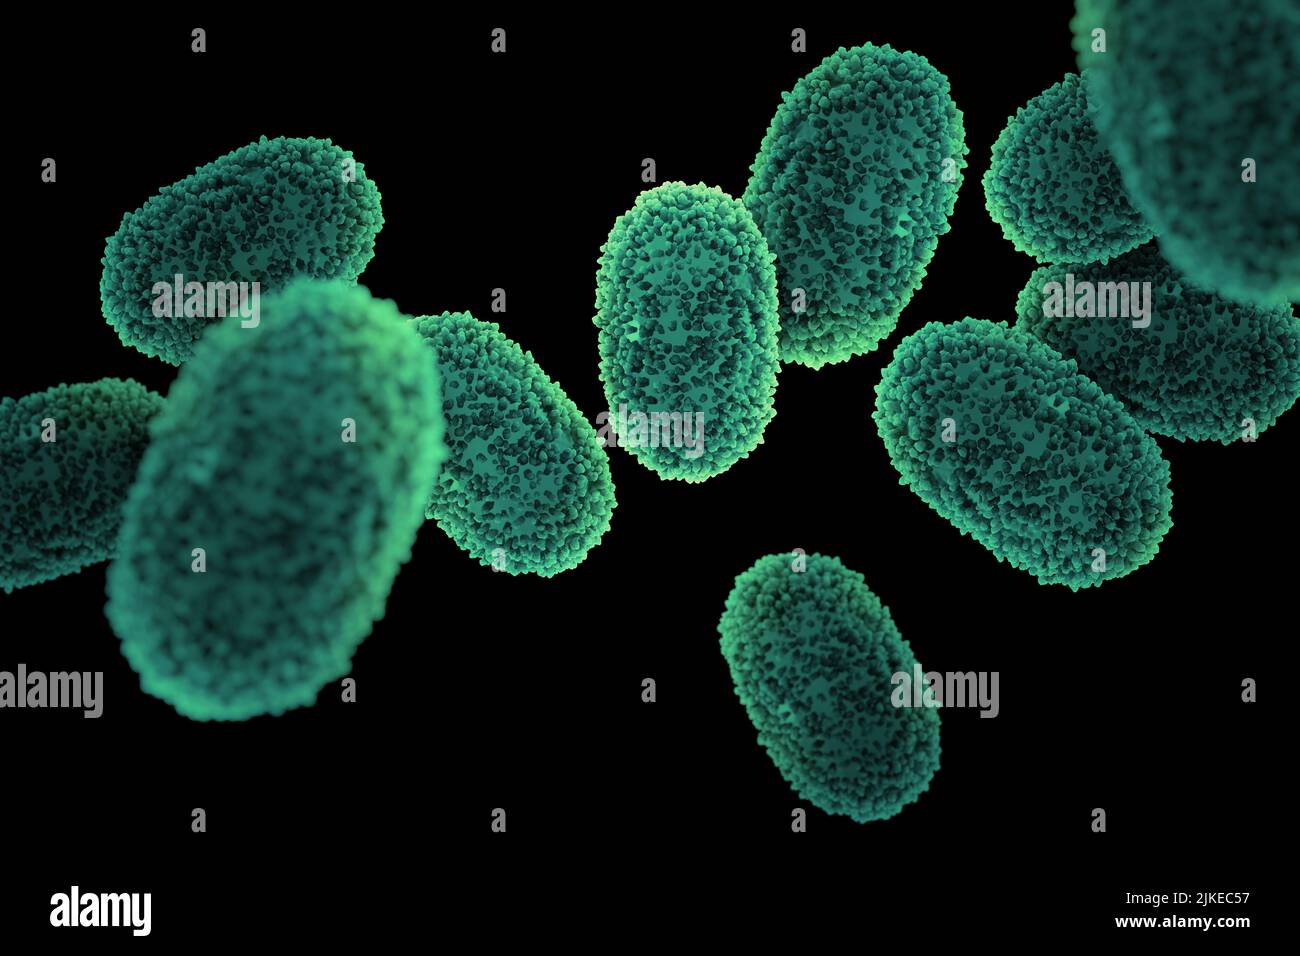 Monkeypox virus medical illustration 3d rendering. Global health emergency monkey pox infection. Stock Photo